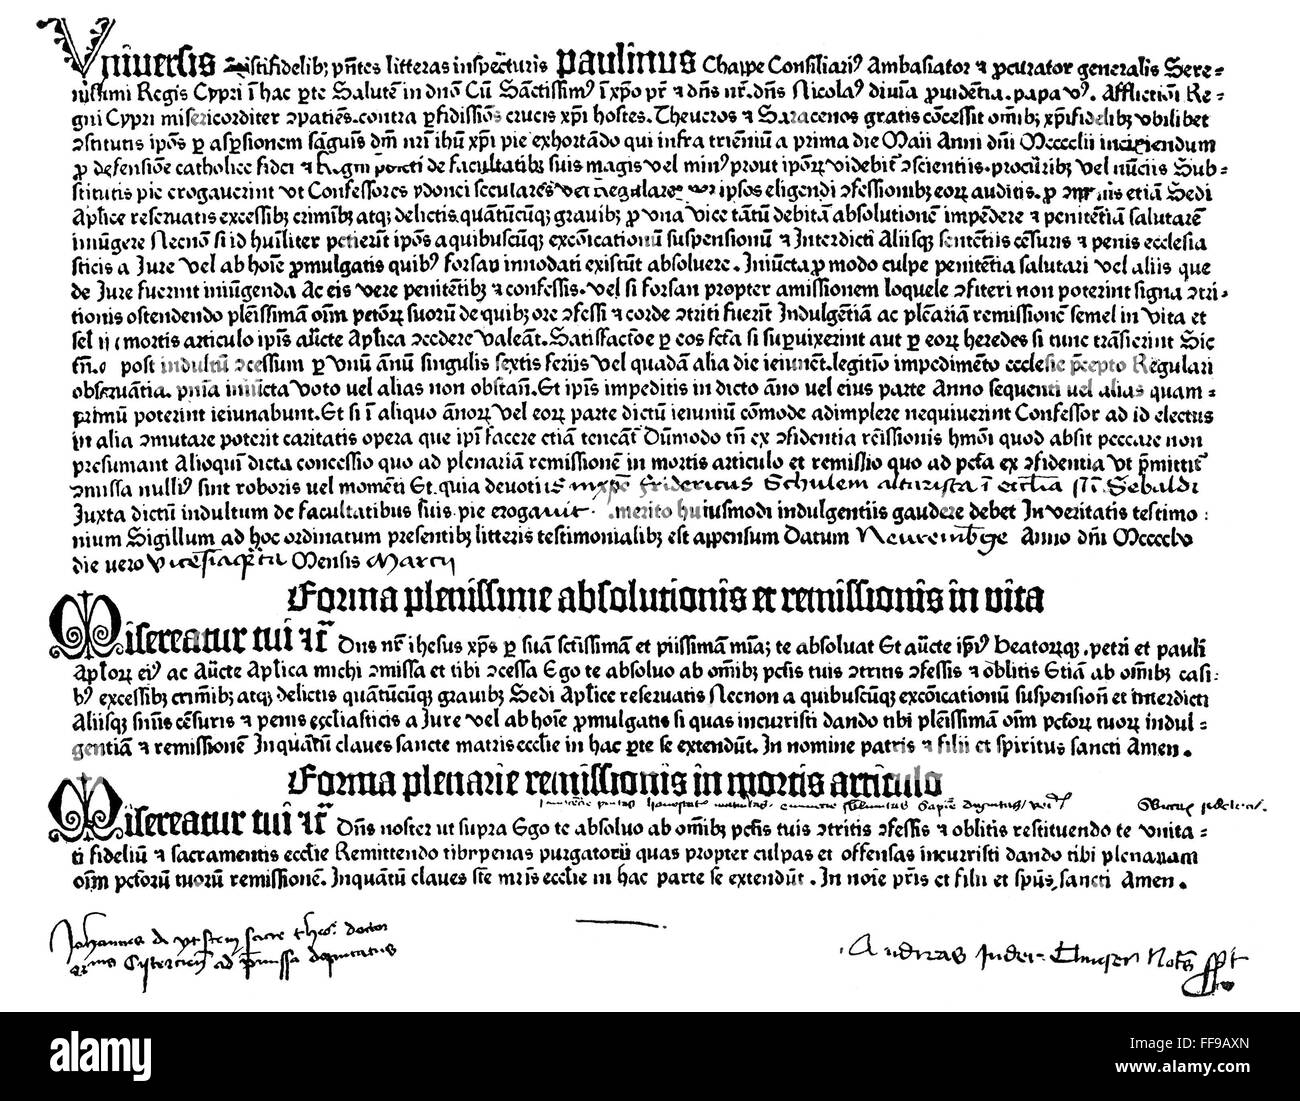 Carta de indulgencia, 1455. /NA carta de indulgencia (Ablass breves) impreso en 1455 por Johann Gutenberg en su primera prensa. Foto de stock